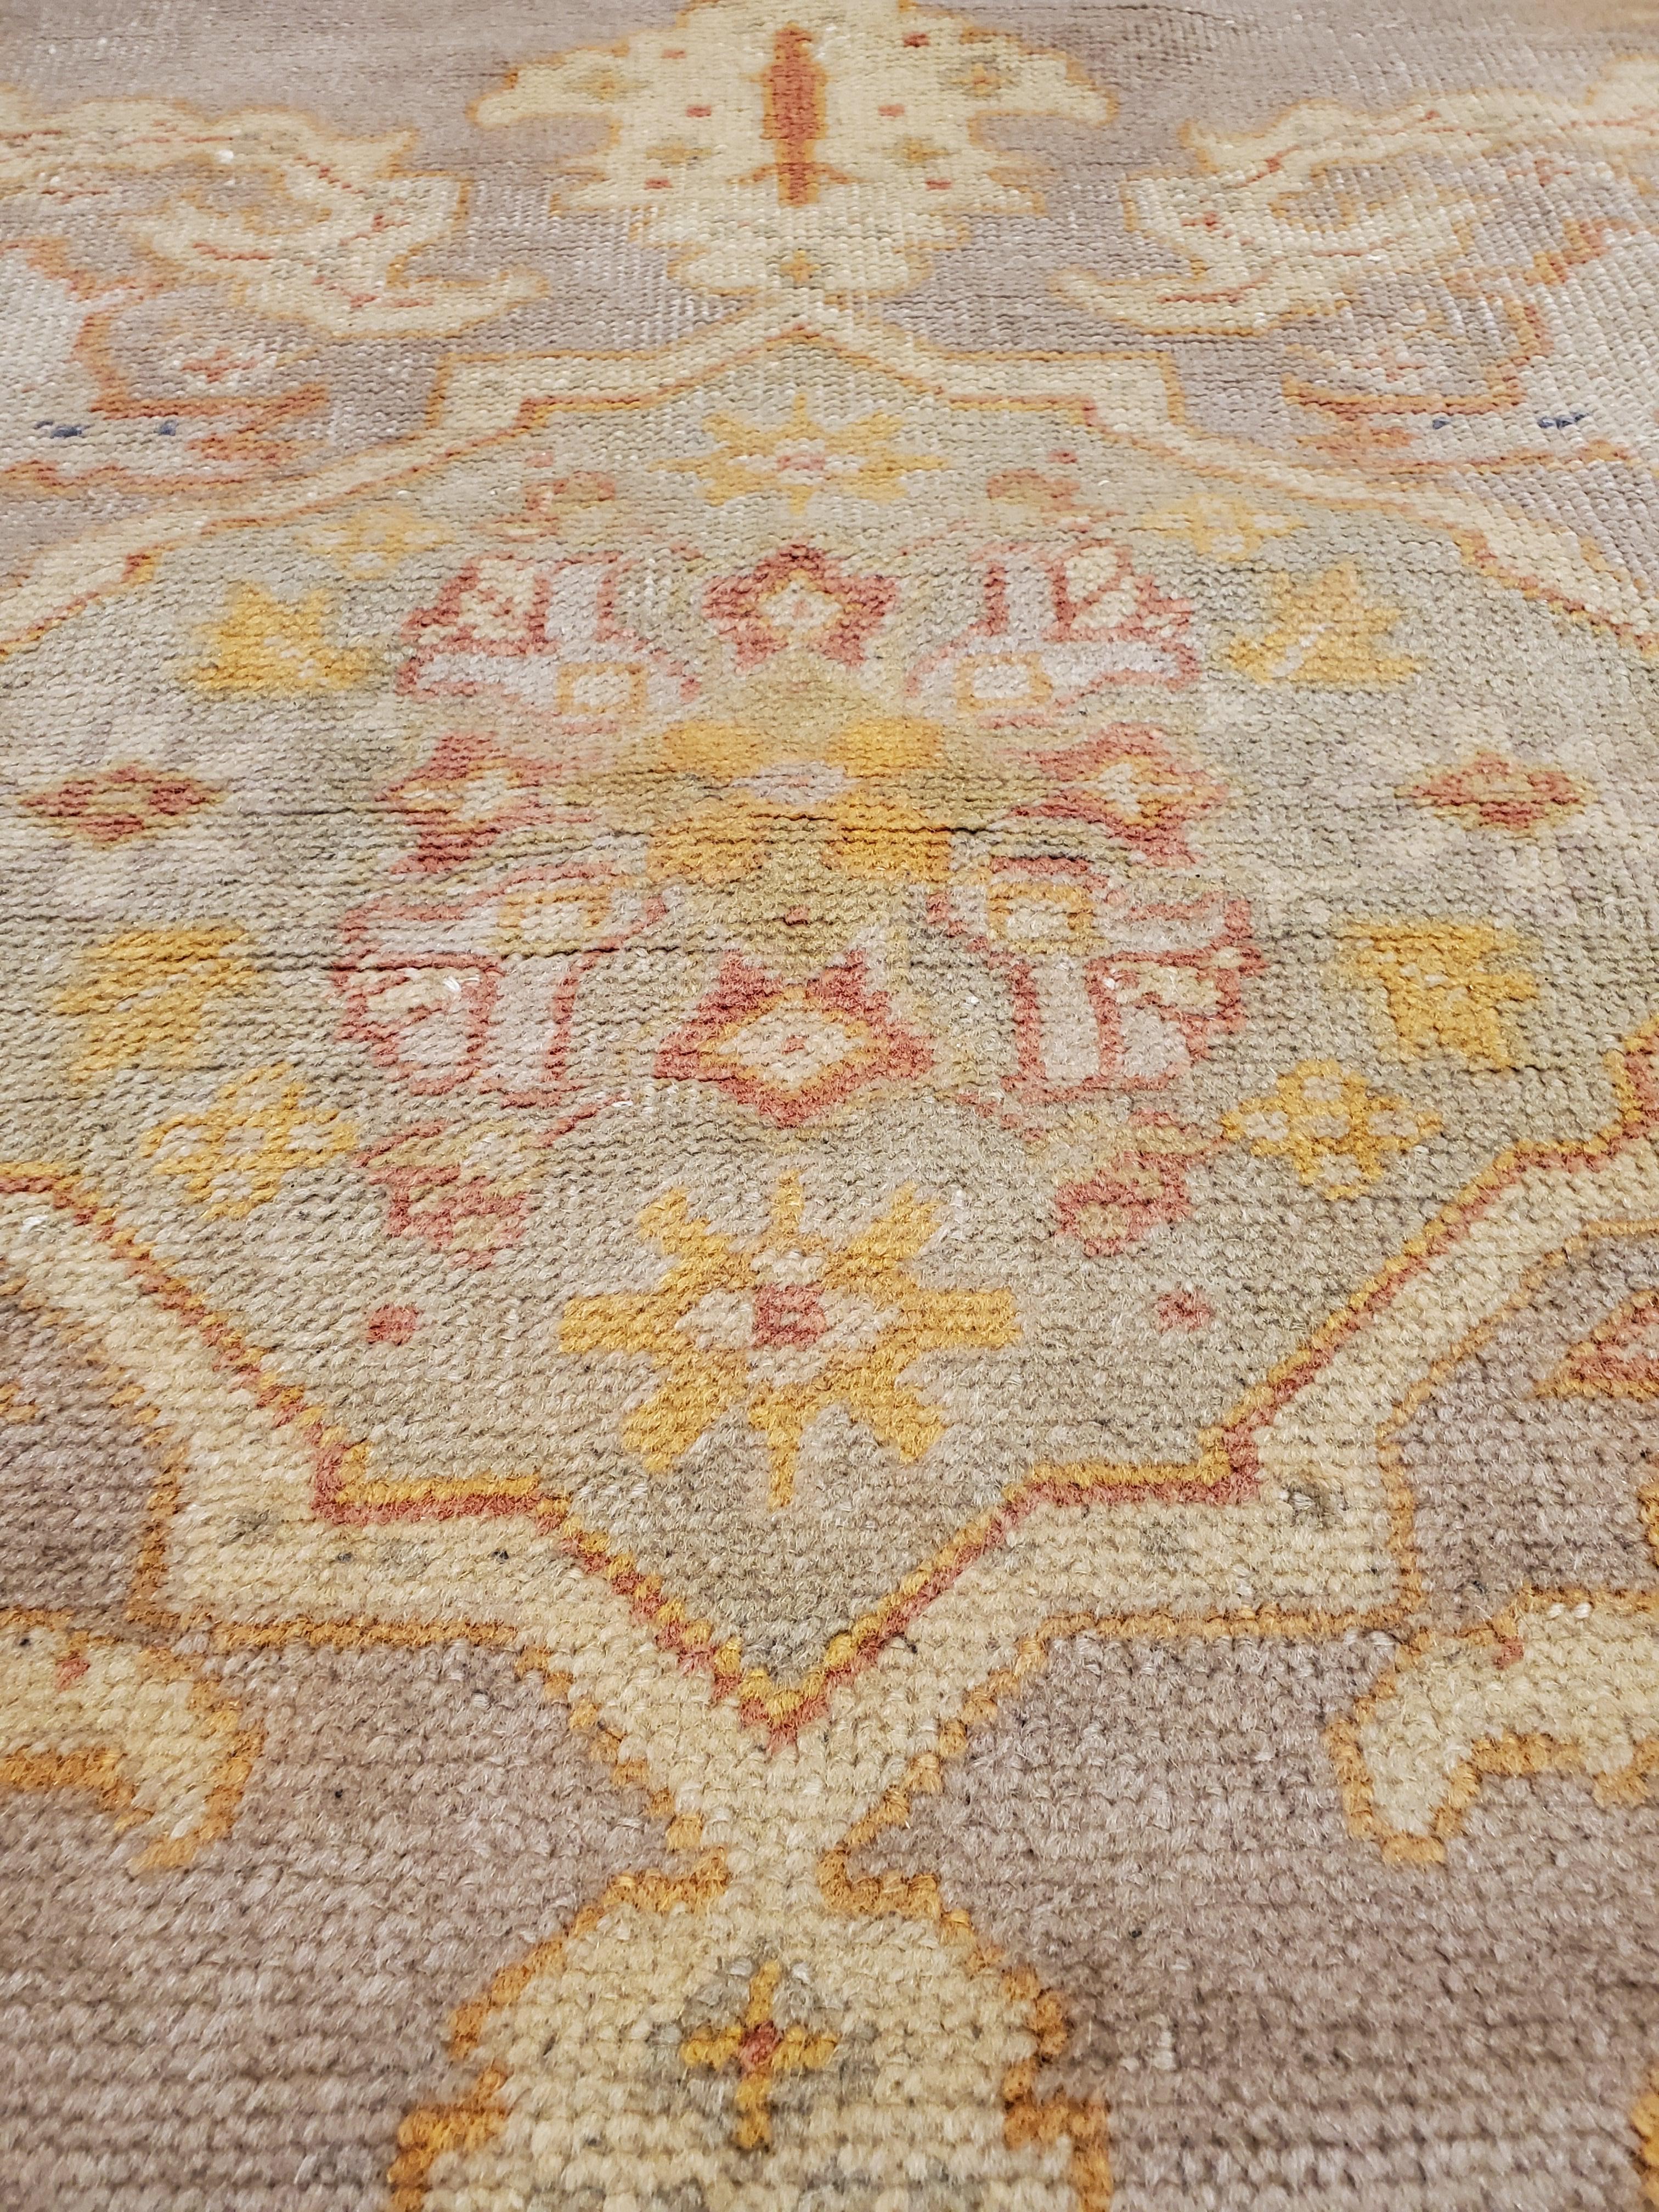 Antique Turkish Oushak Carpet, Handmade Oriental Rug, Gray, Taupe, Saffron Coral 2